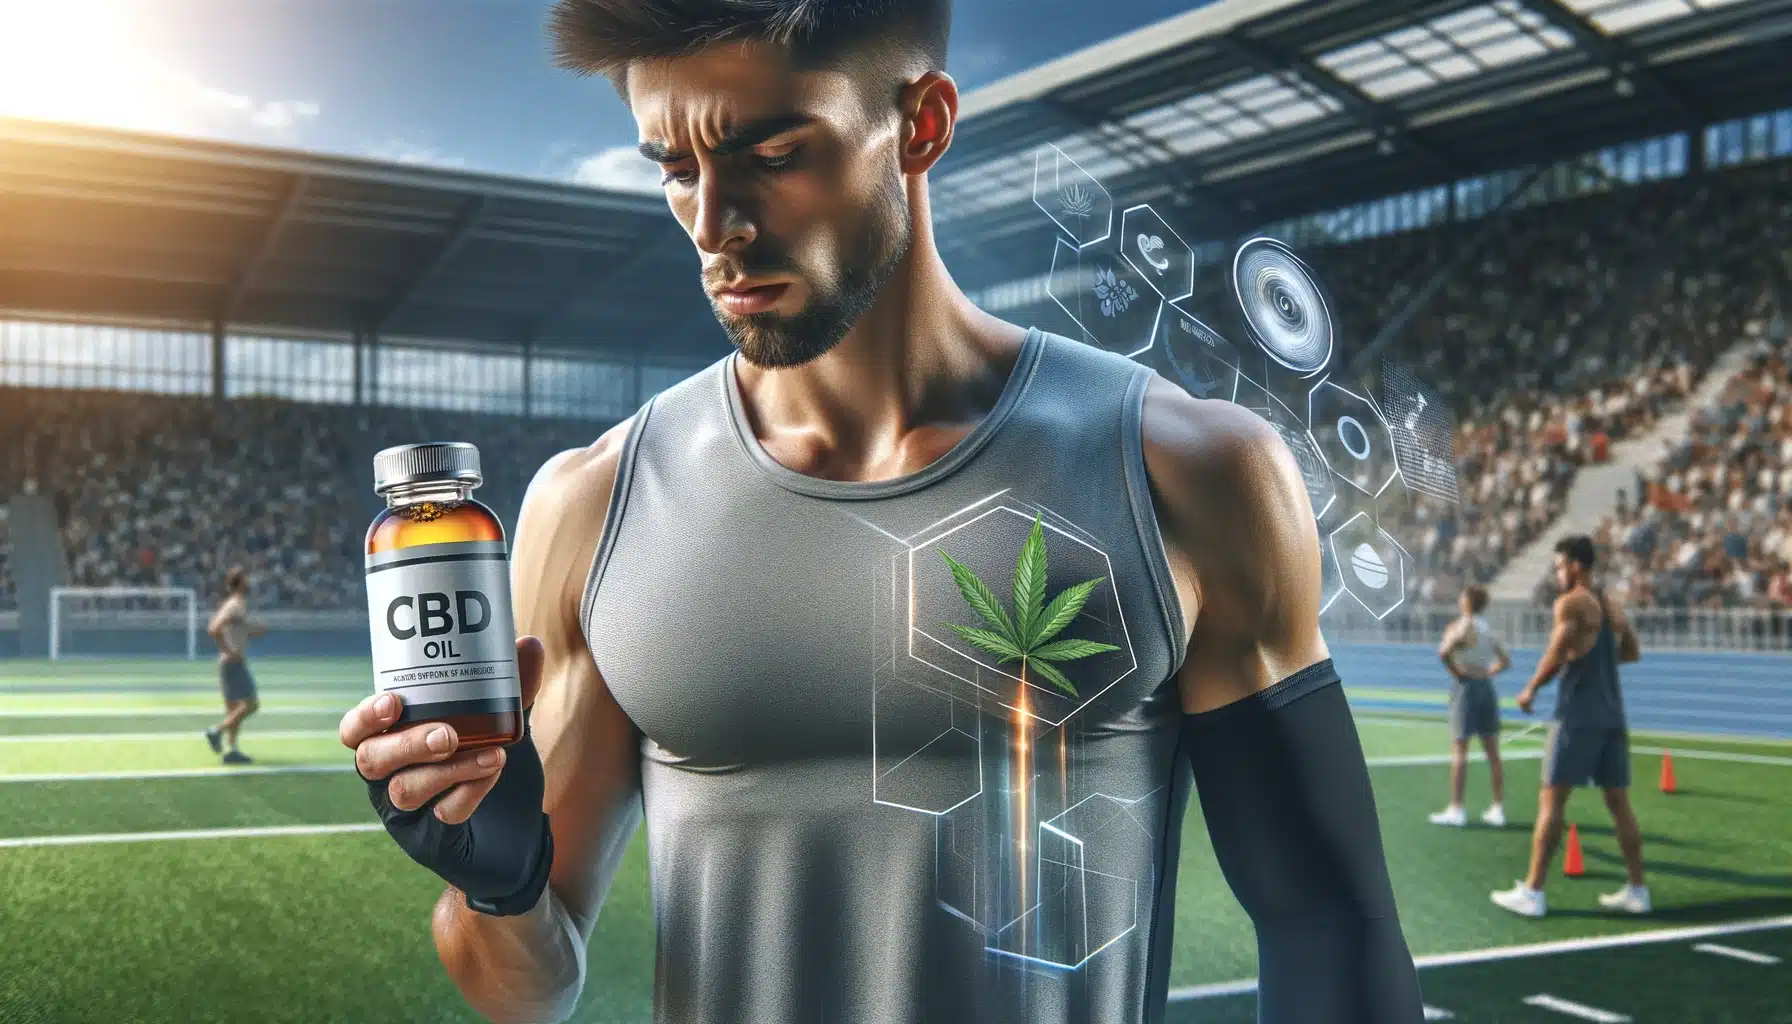 A man holding a bottle of cbd oil on a football field.